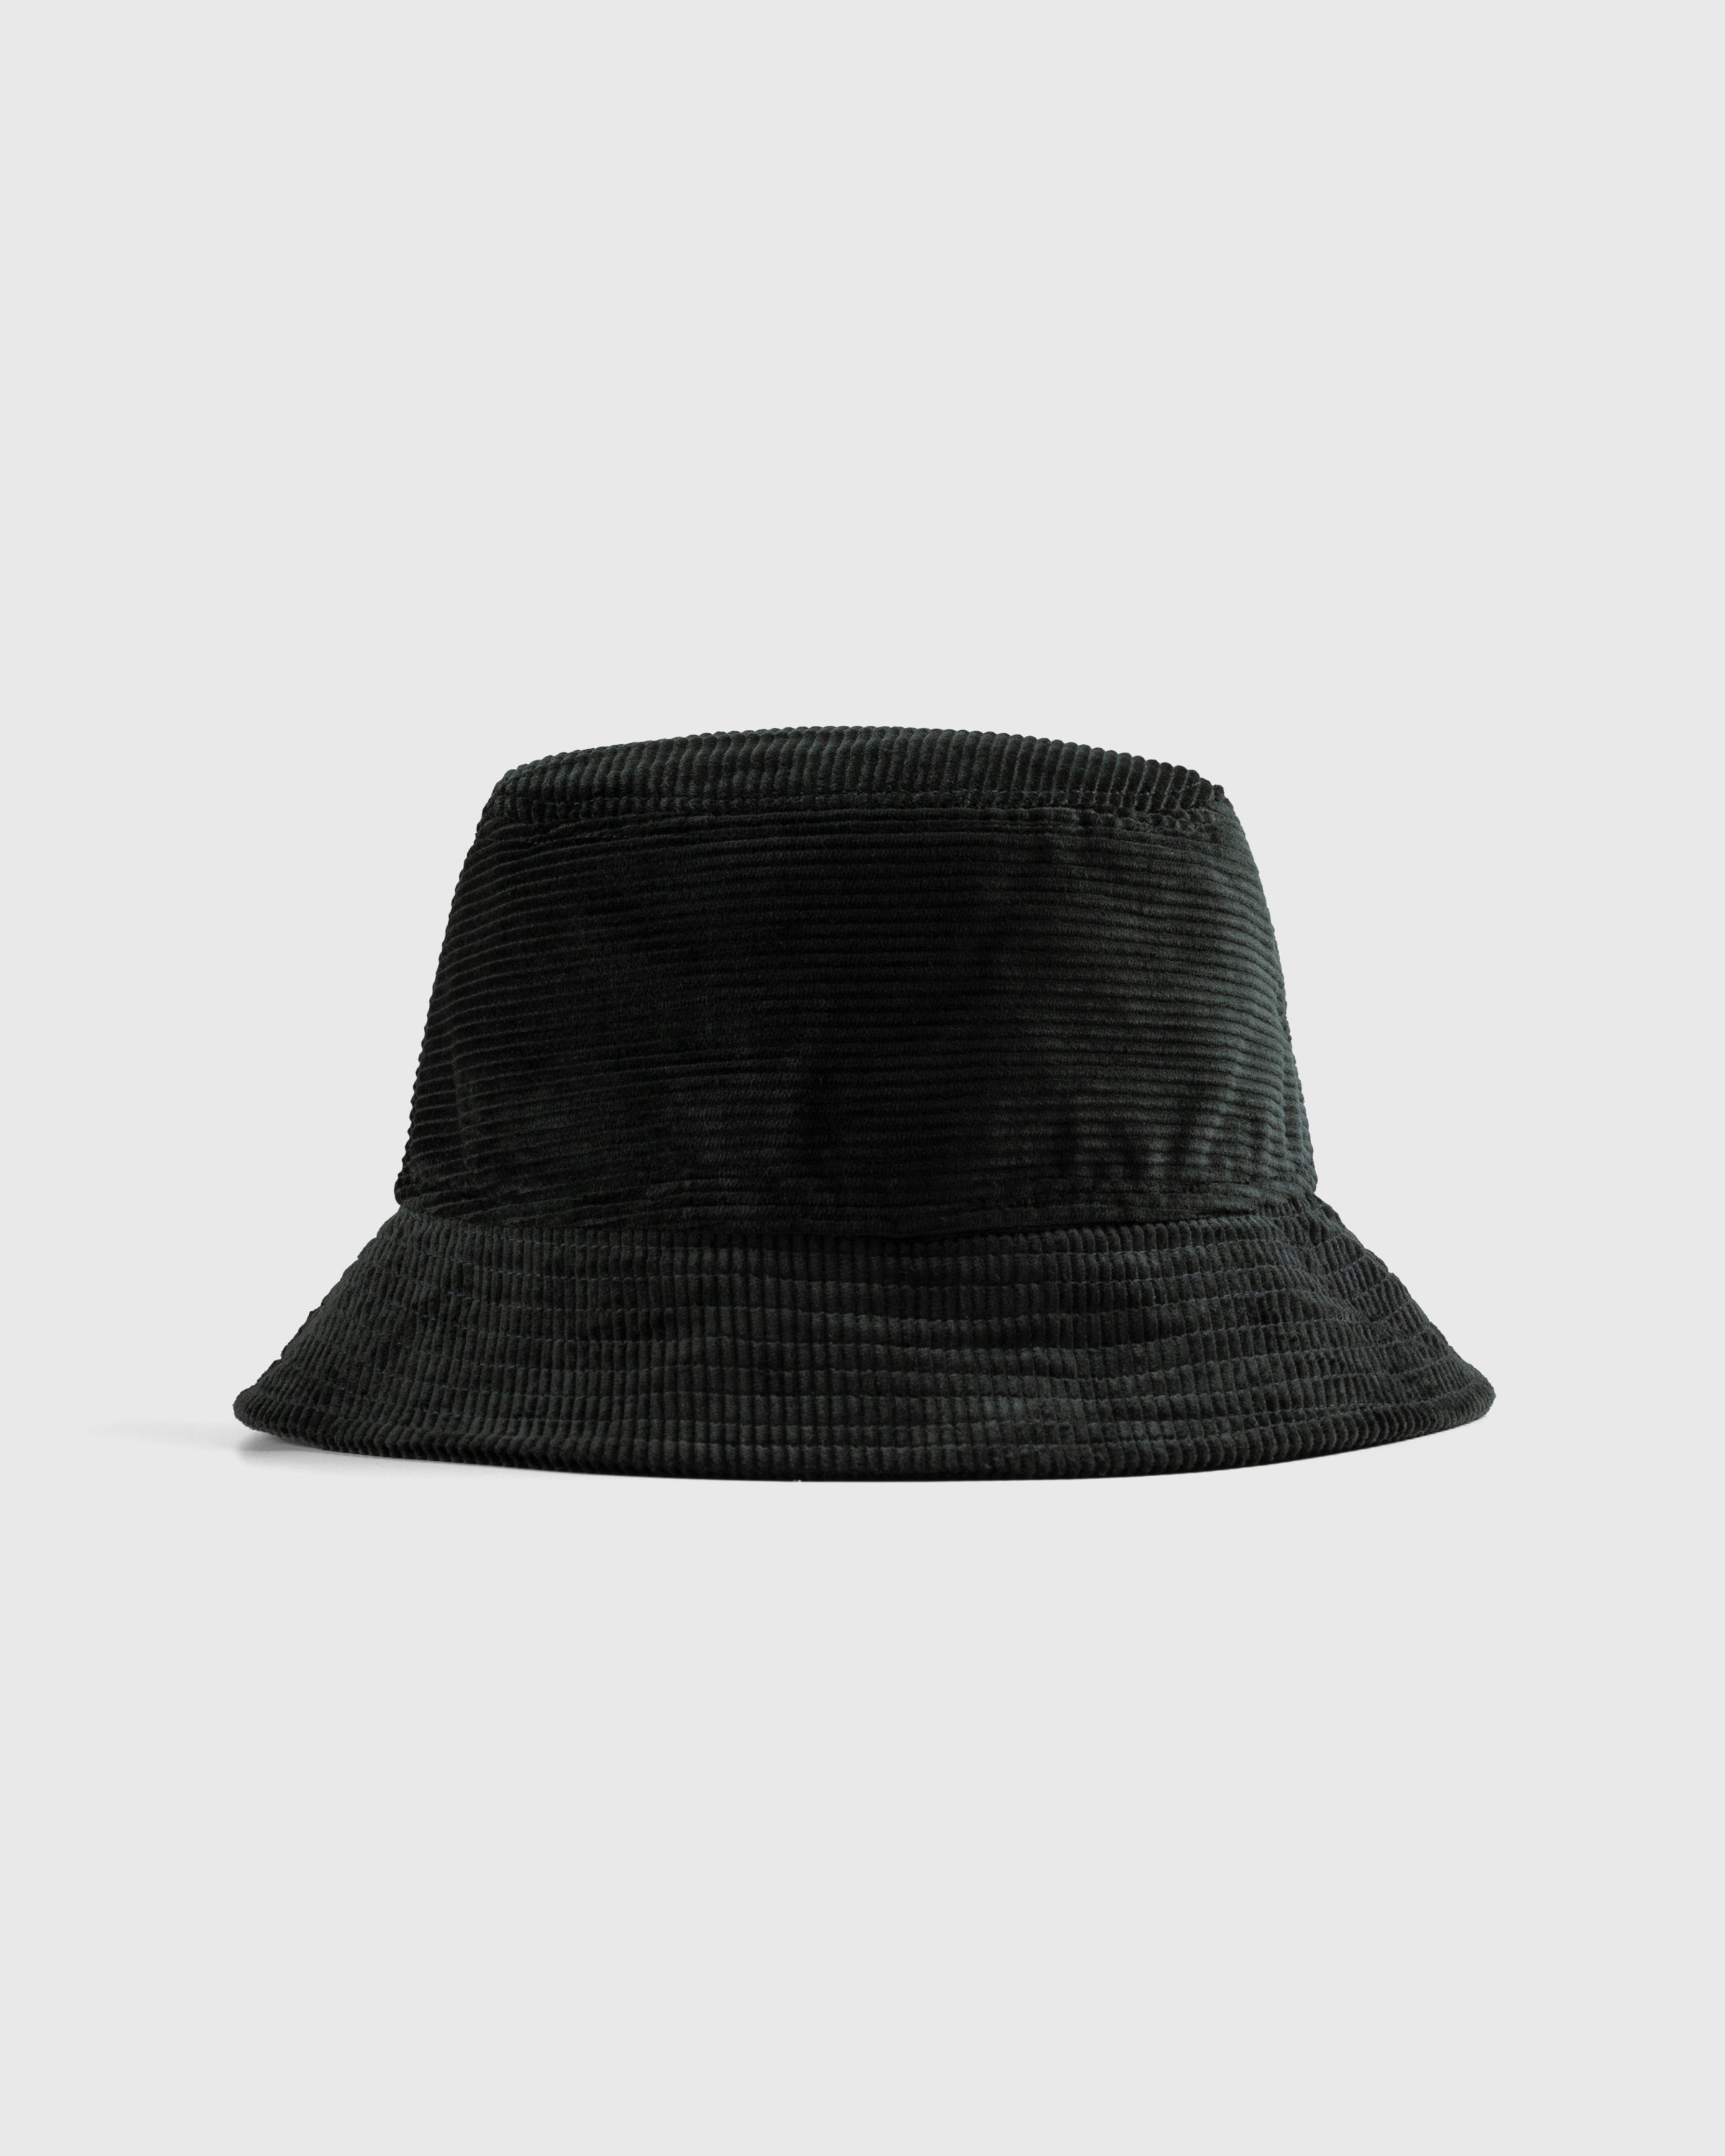 Carhartt WIP – Cord Bucket Hat Dark Cedar